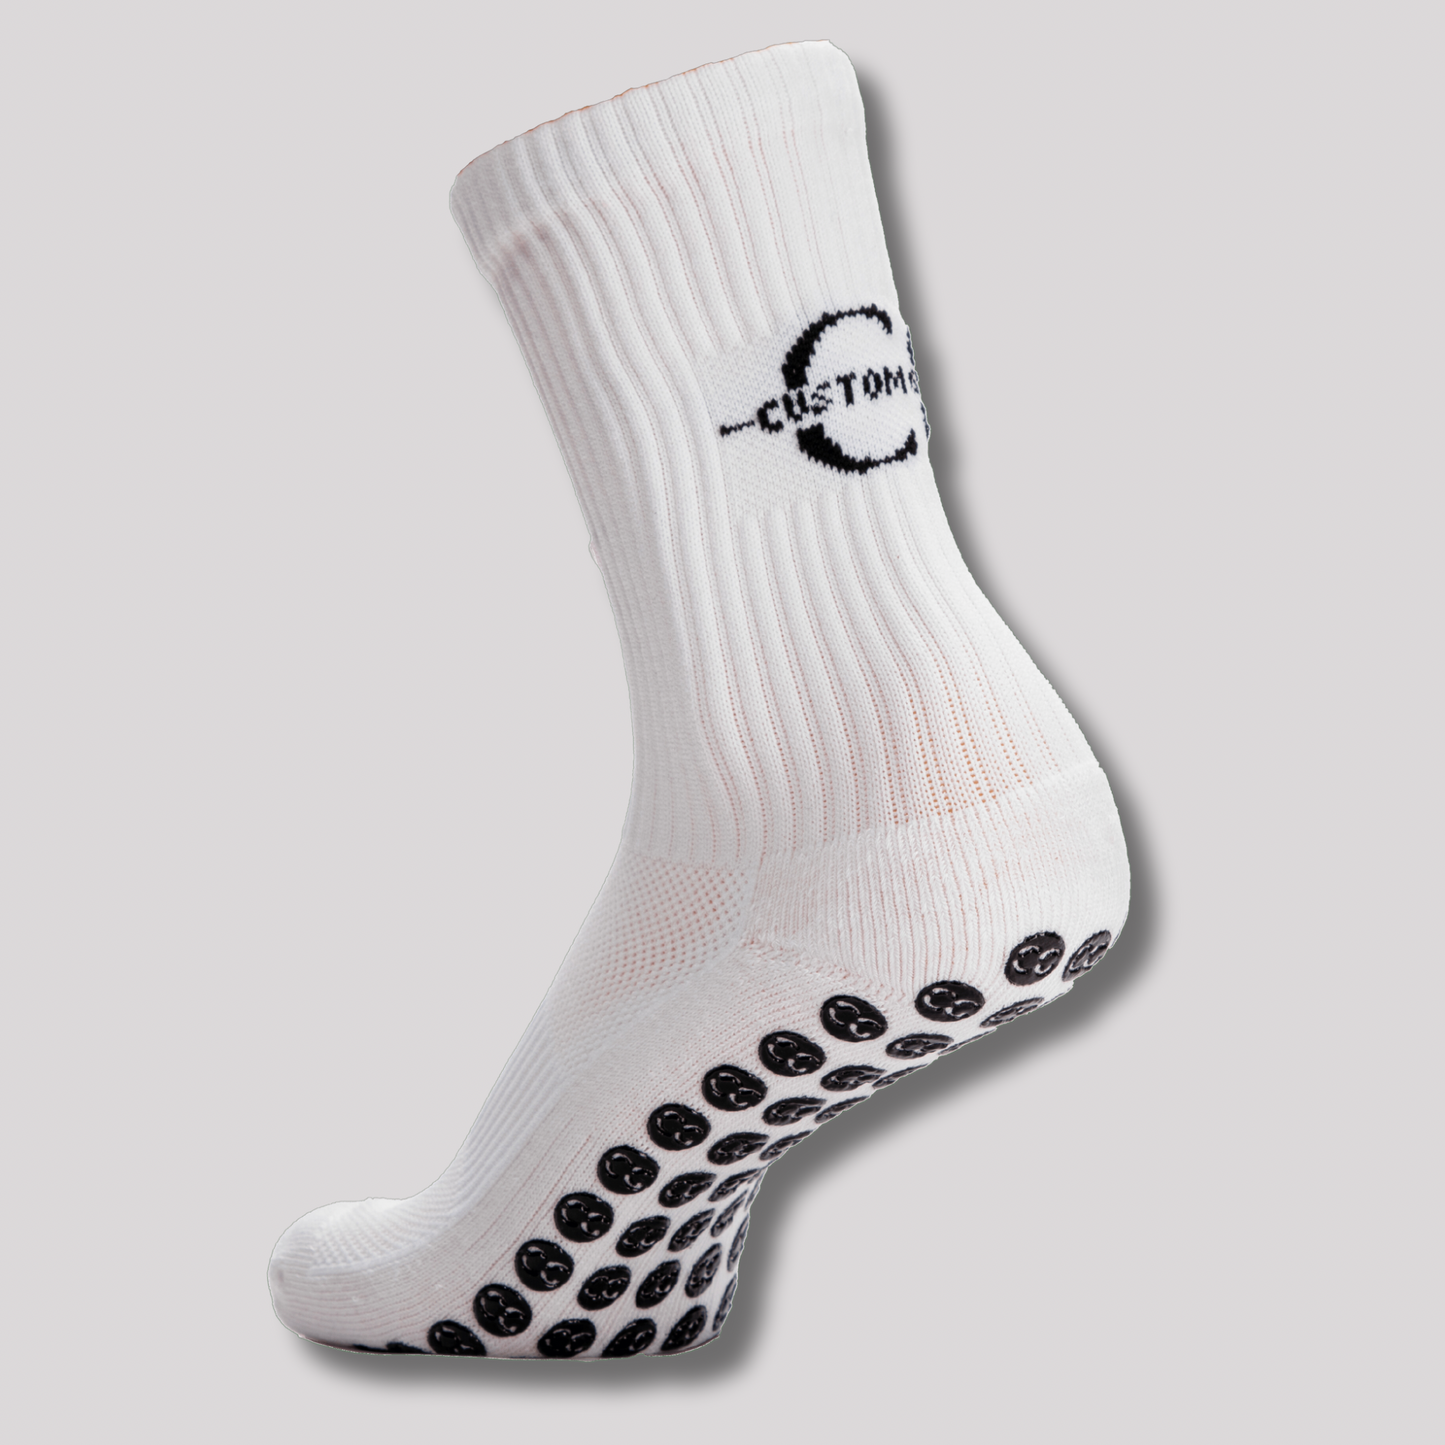 Football Grip Socks - Mid Calf Length - Custom Guards